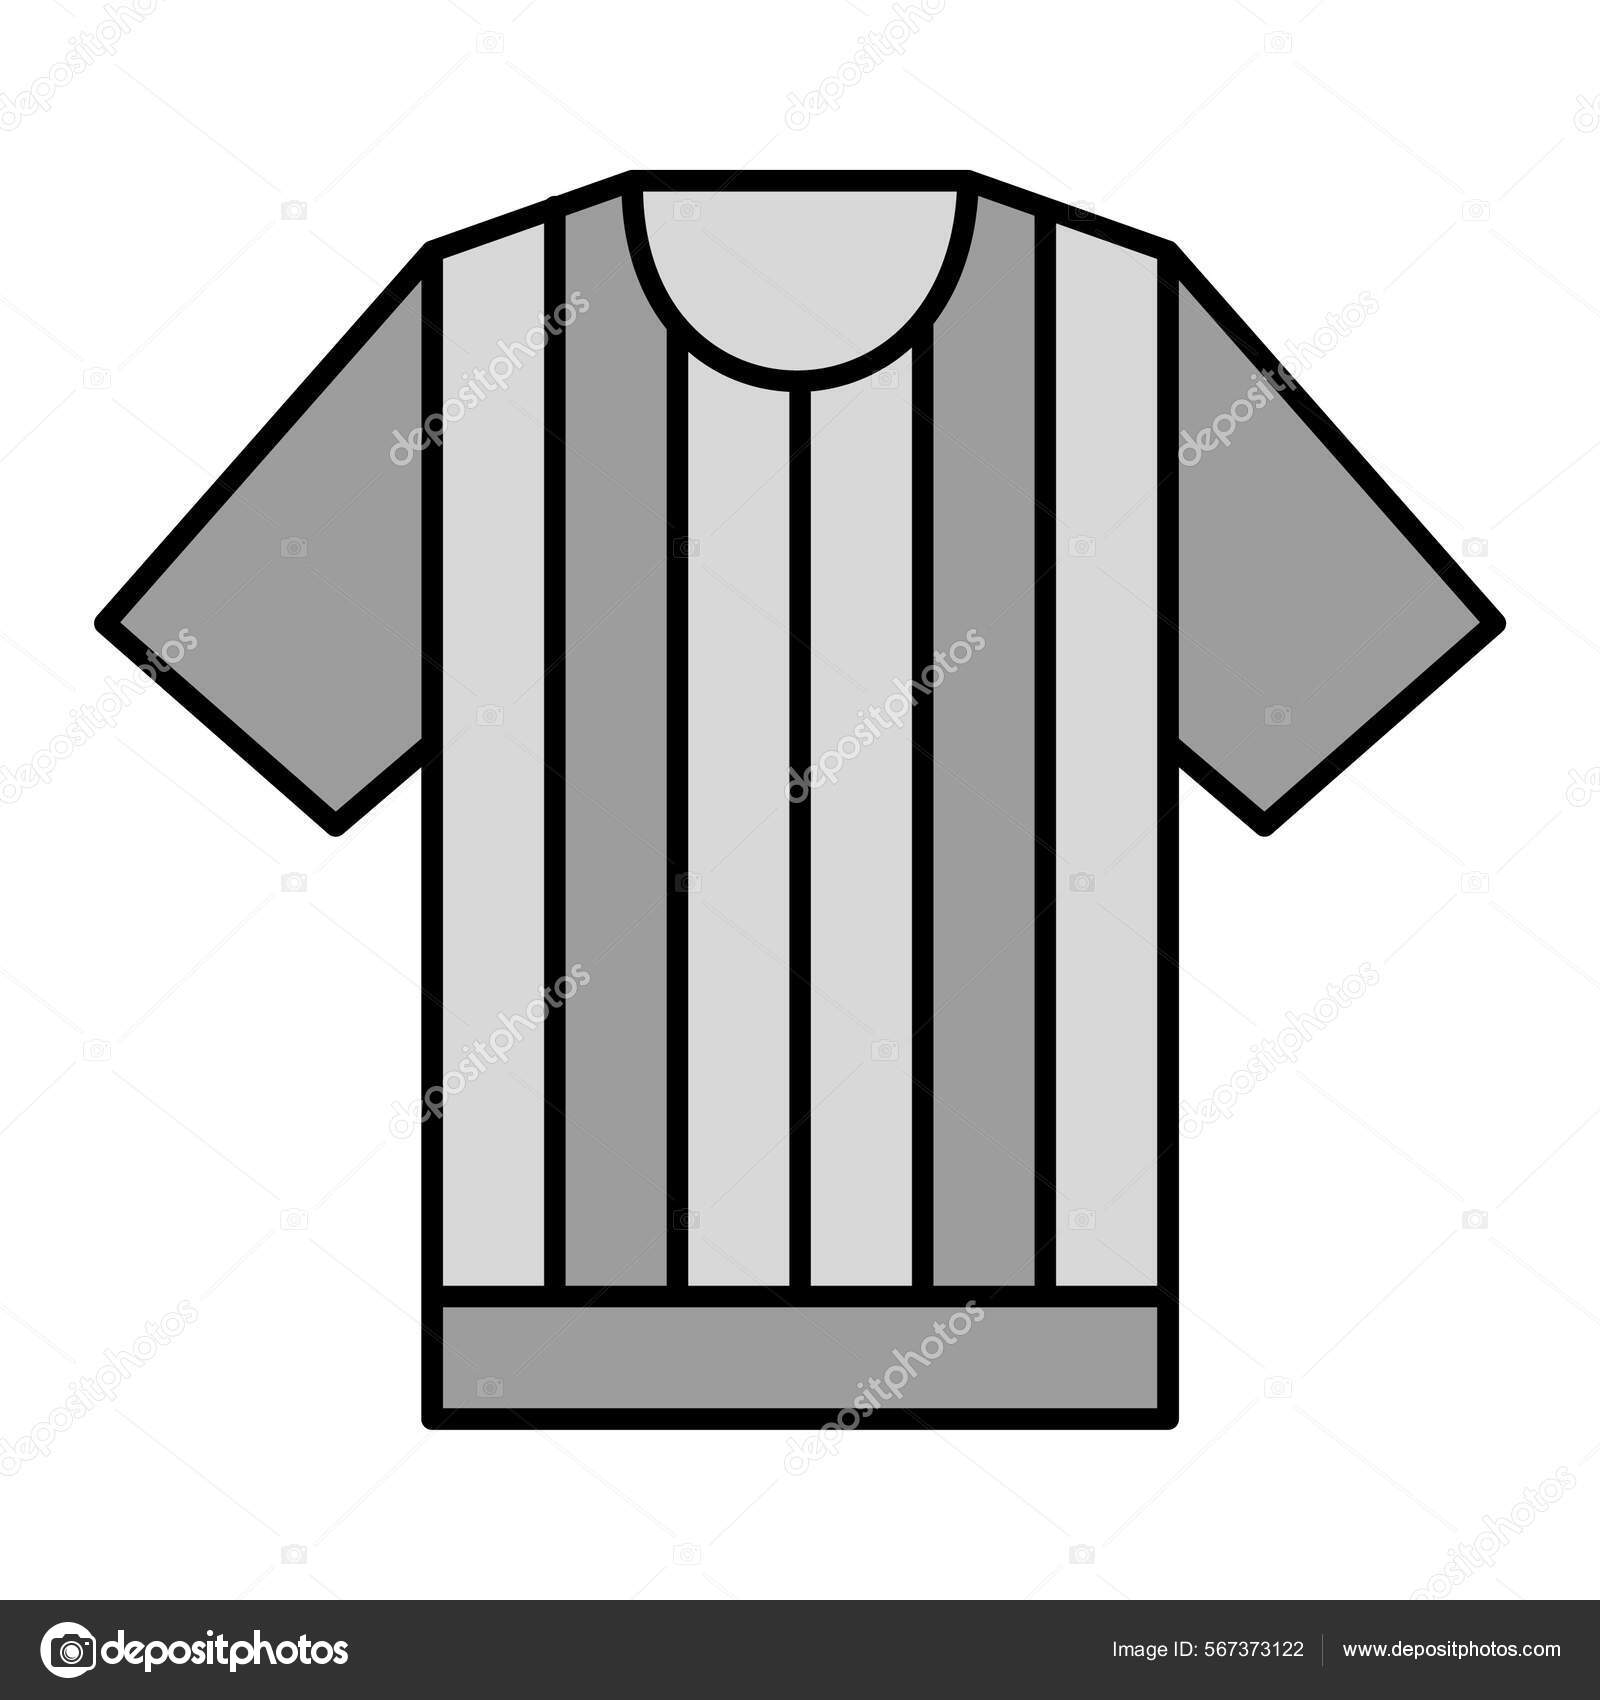 Referee shirt uniform icon Royalty Free Vector Image